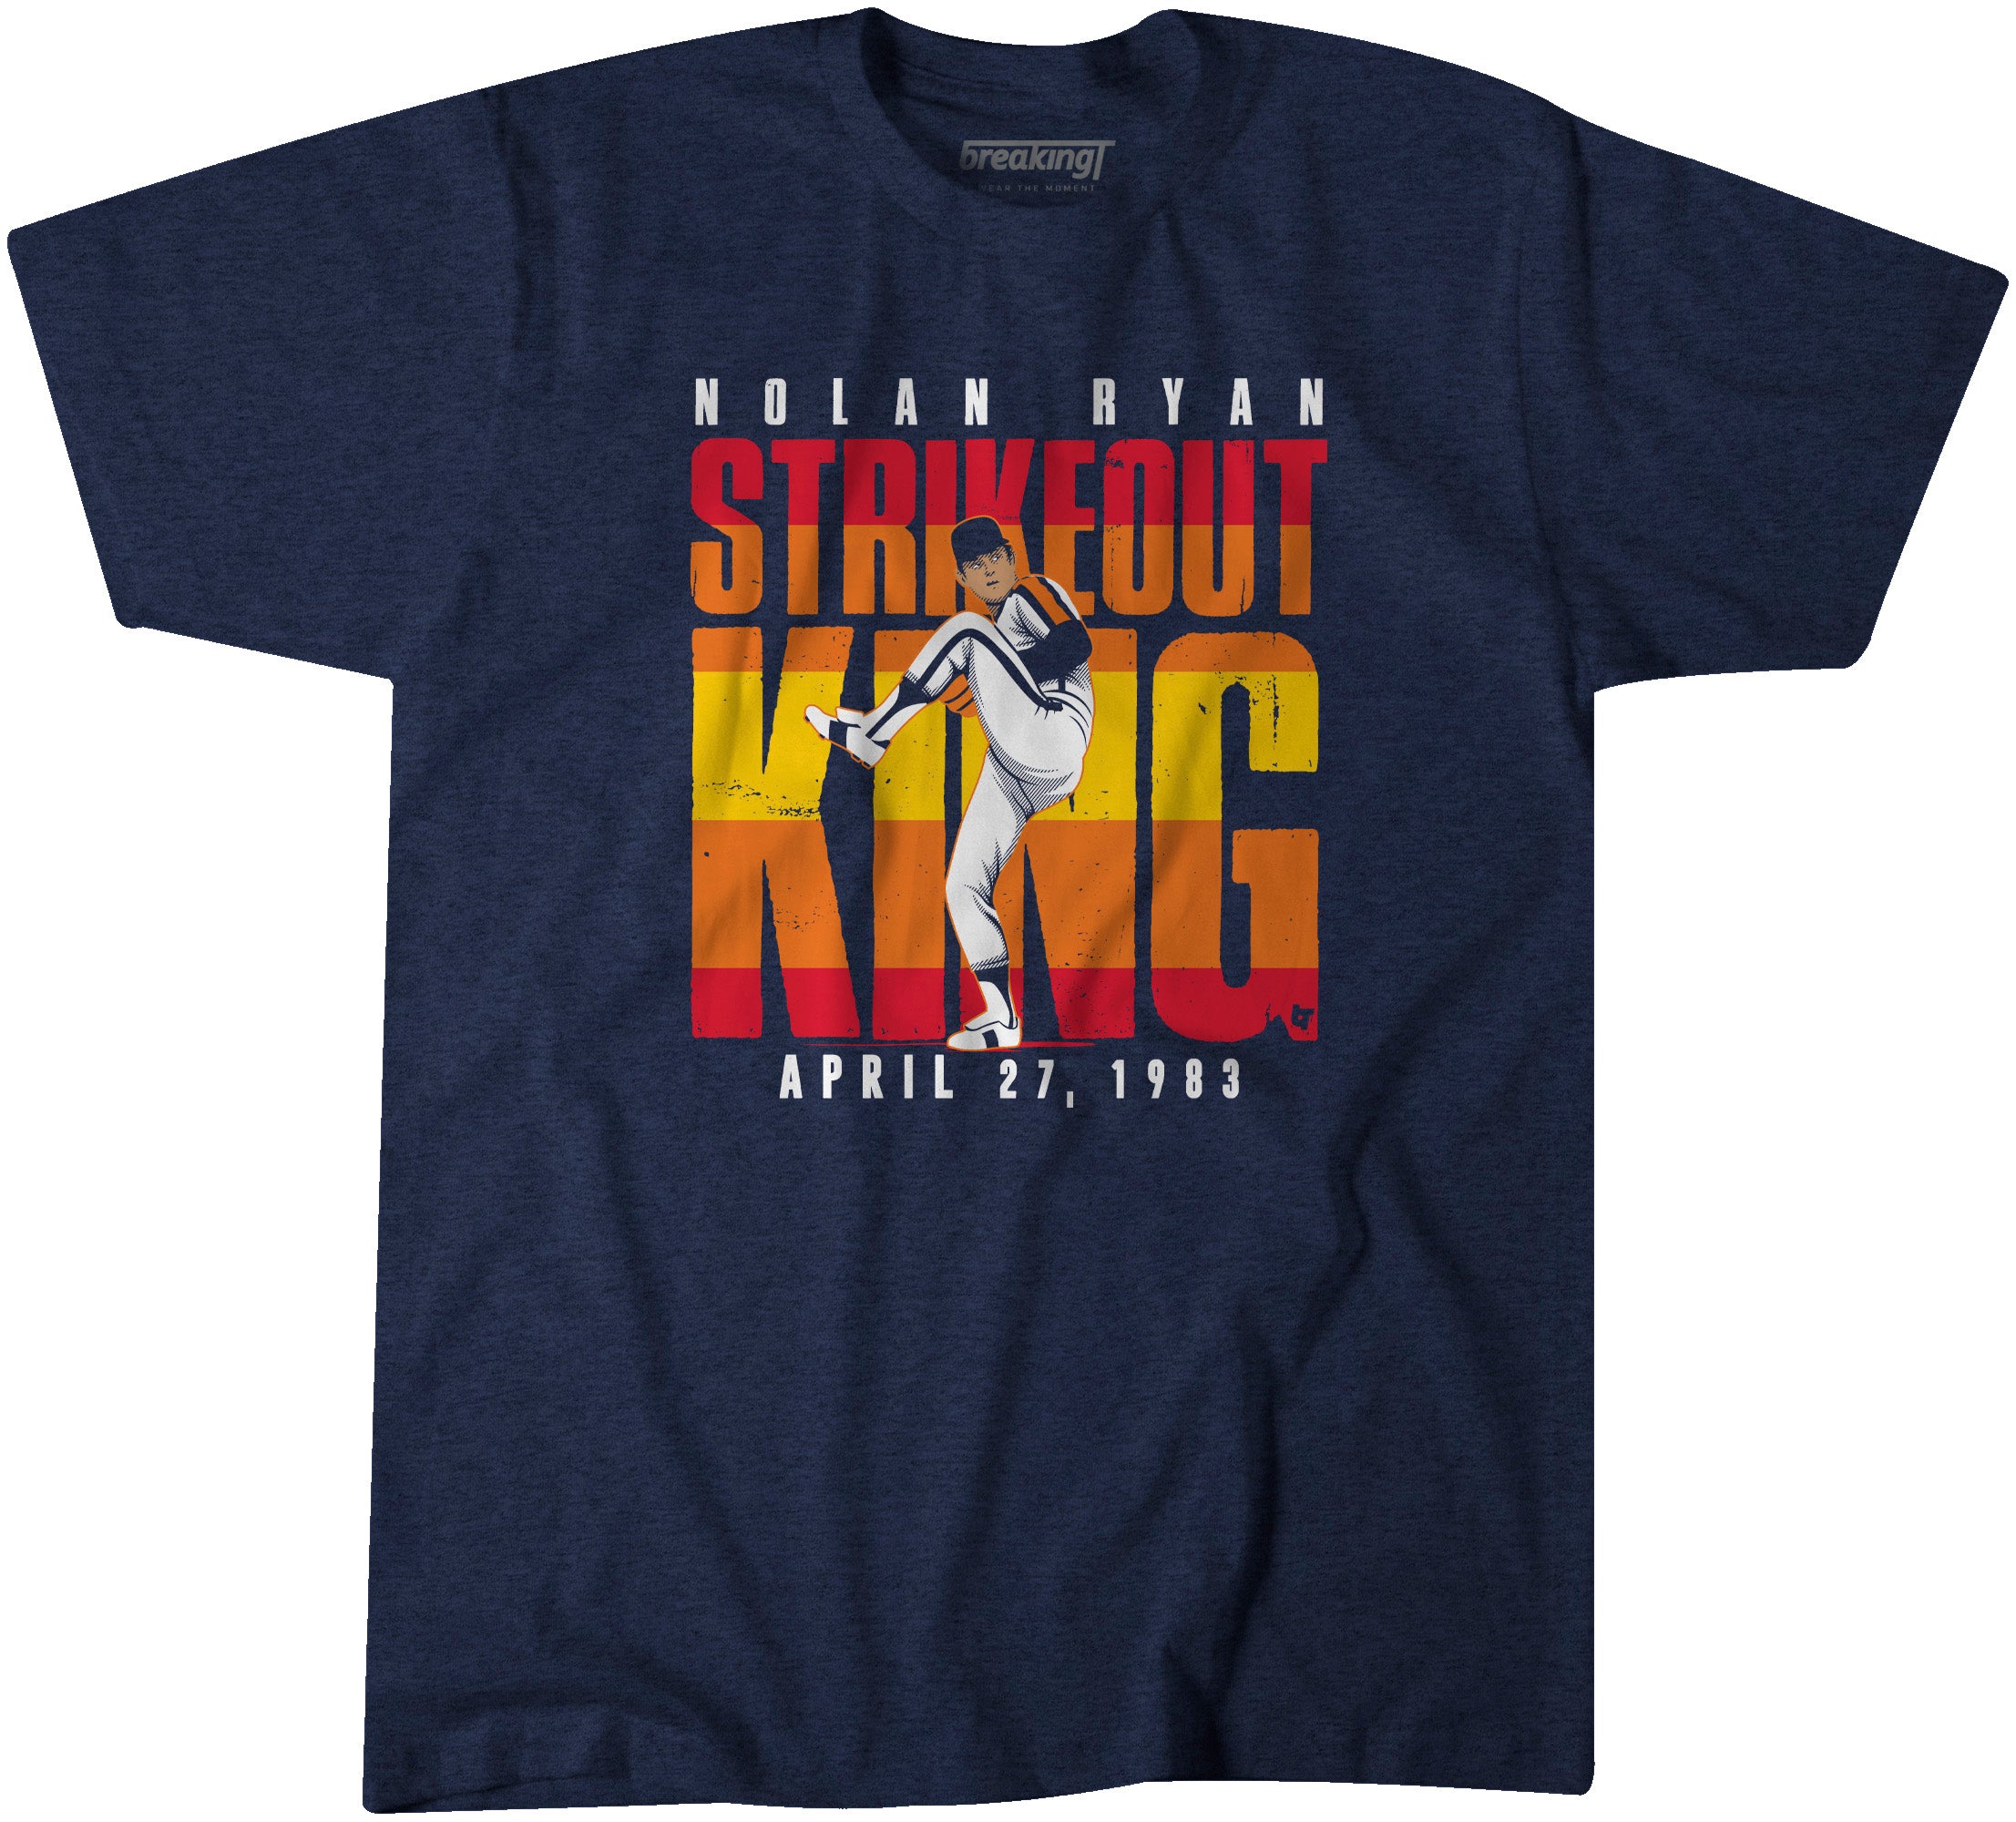 Nolan Ryan Shirt, Strikeout King, Houston